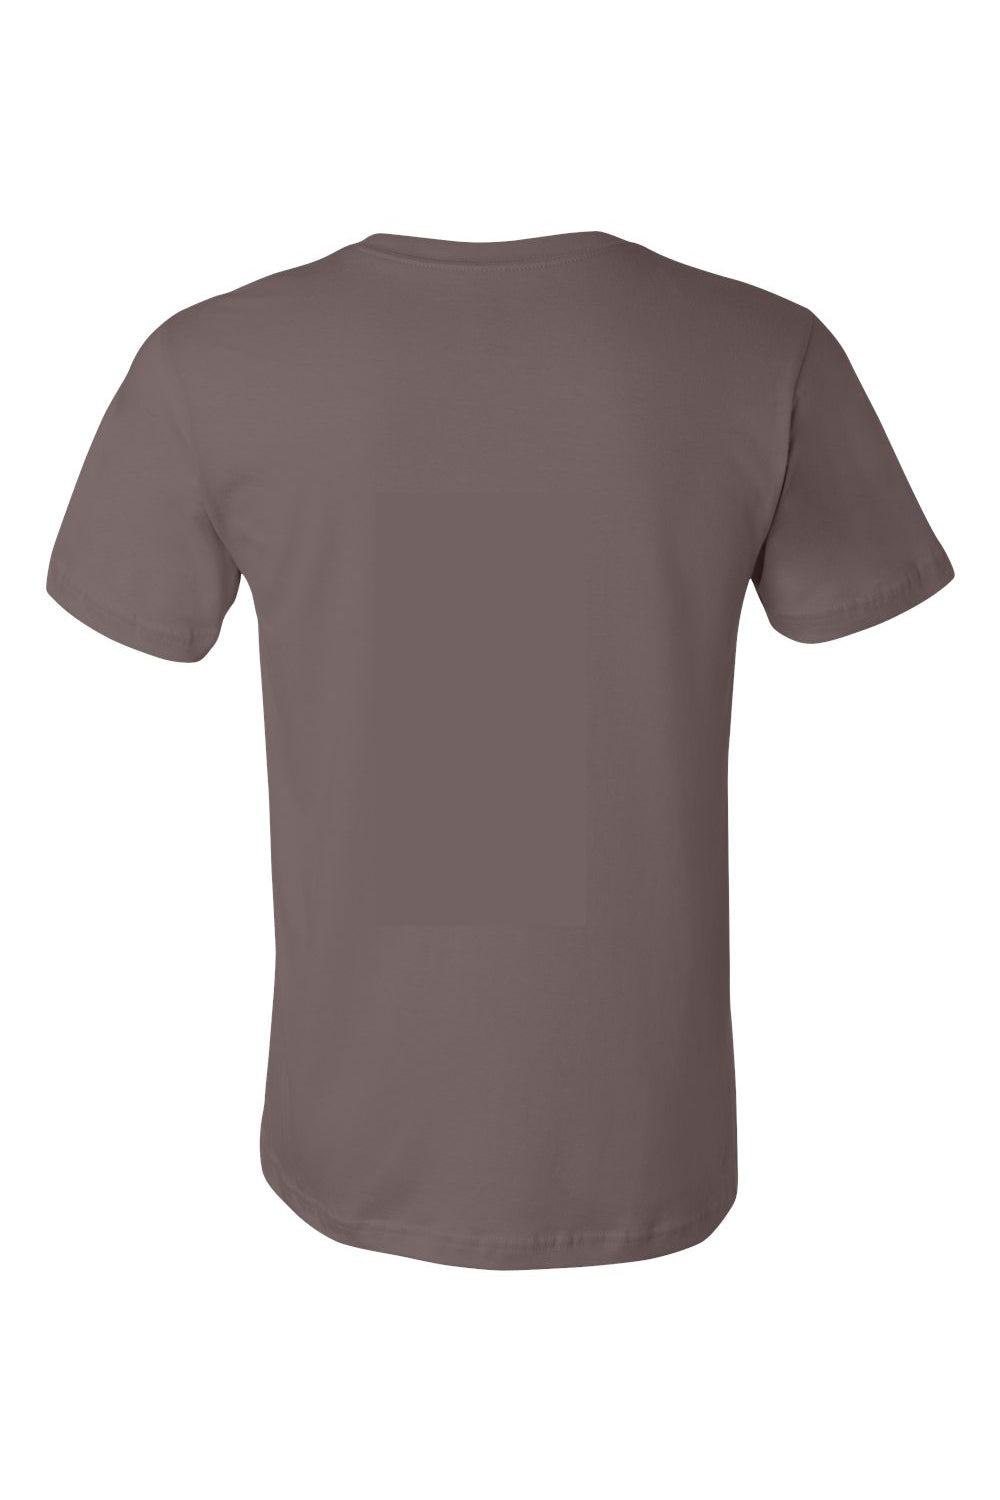 Bella + Canvas BC3001/3001C Mens Jersey Short Sleeve Crewneck T-Shirt Pebble Flat Back